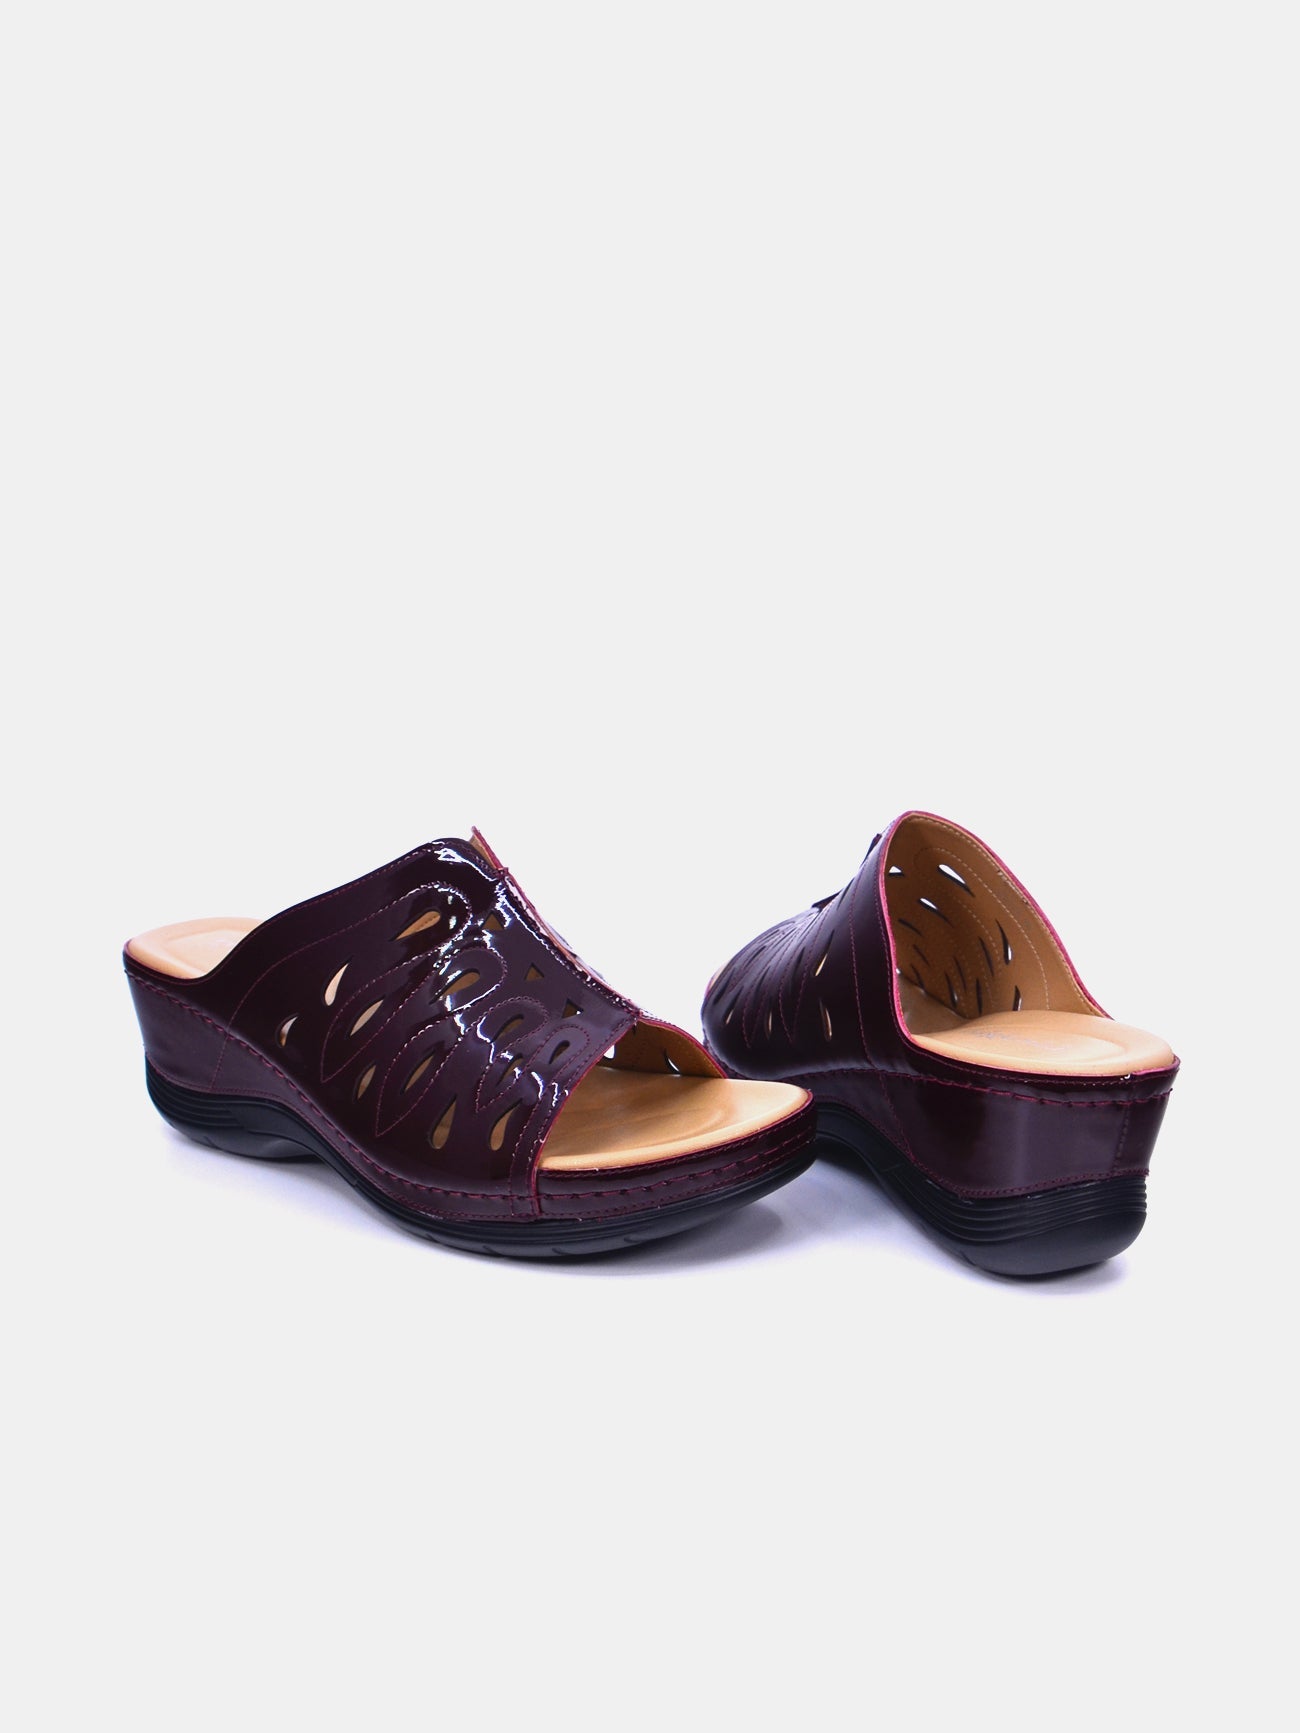 Michelle Morgan 2407-2 Women's Wedge Sandals #color_Maroon